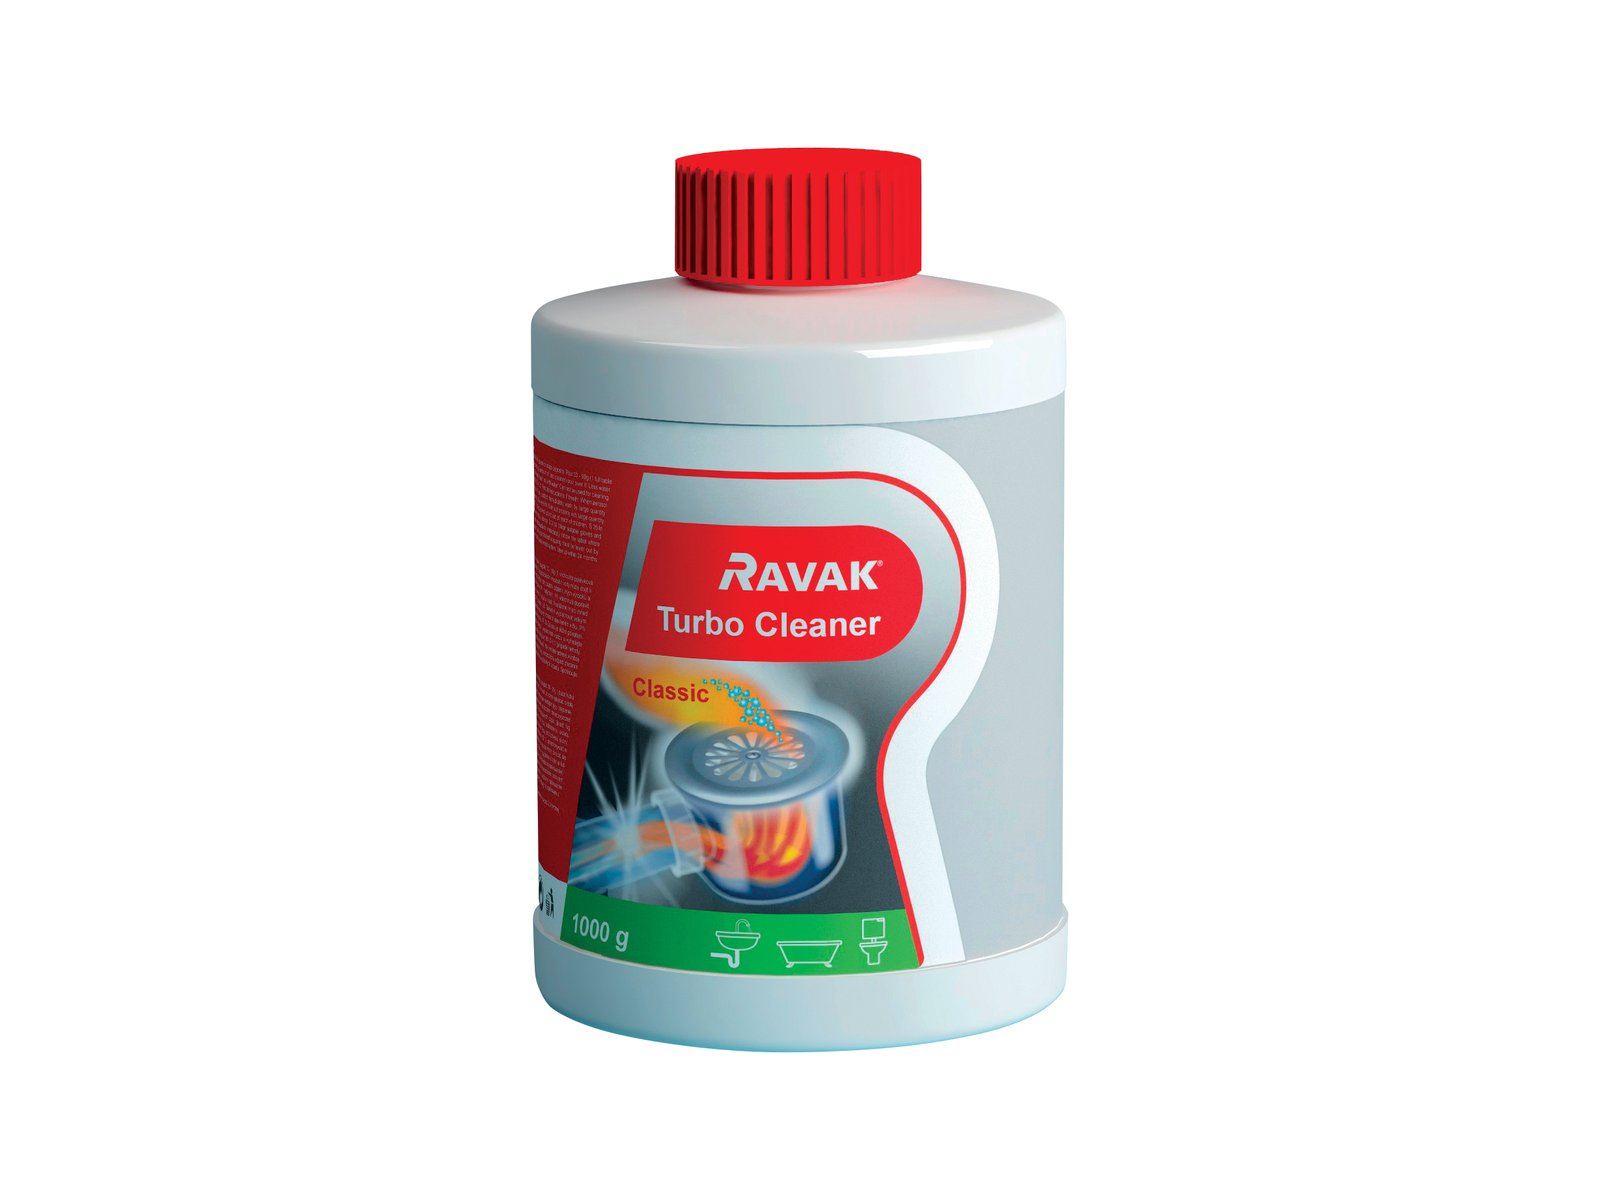 RAVAK TURBO CLEANER (1000 g)